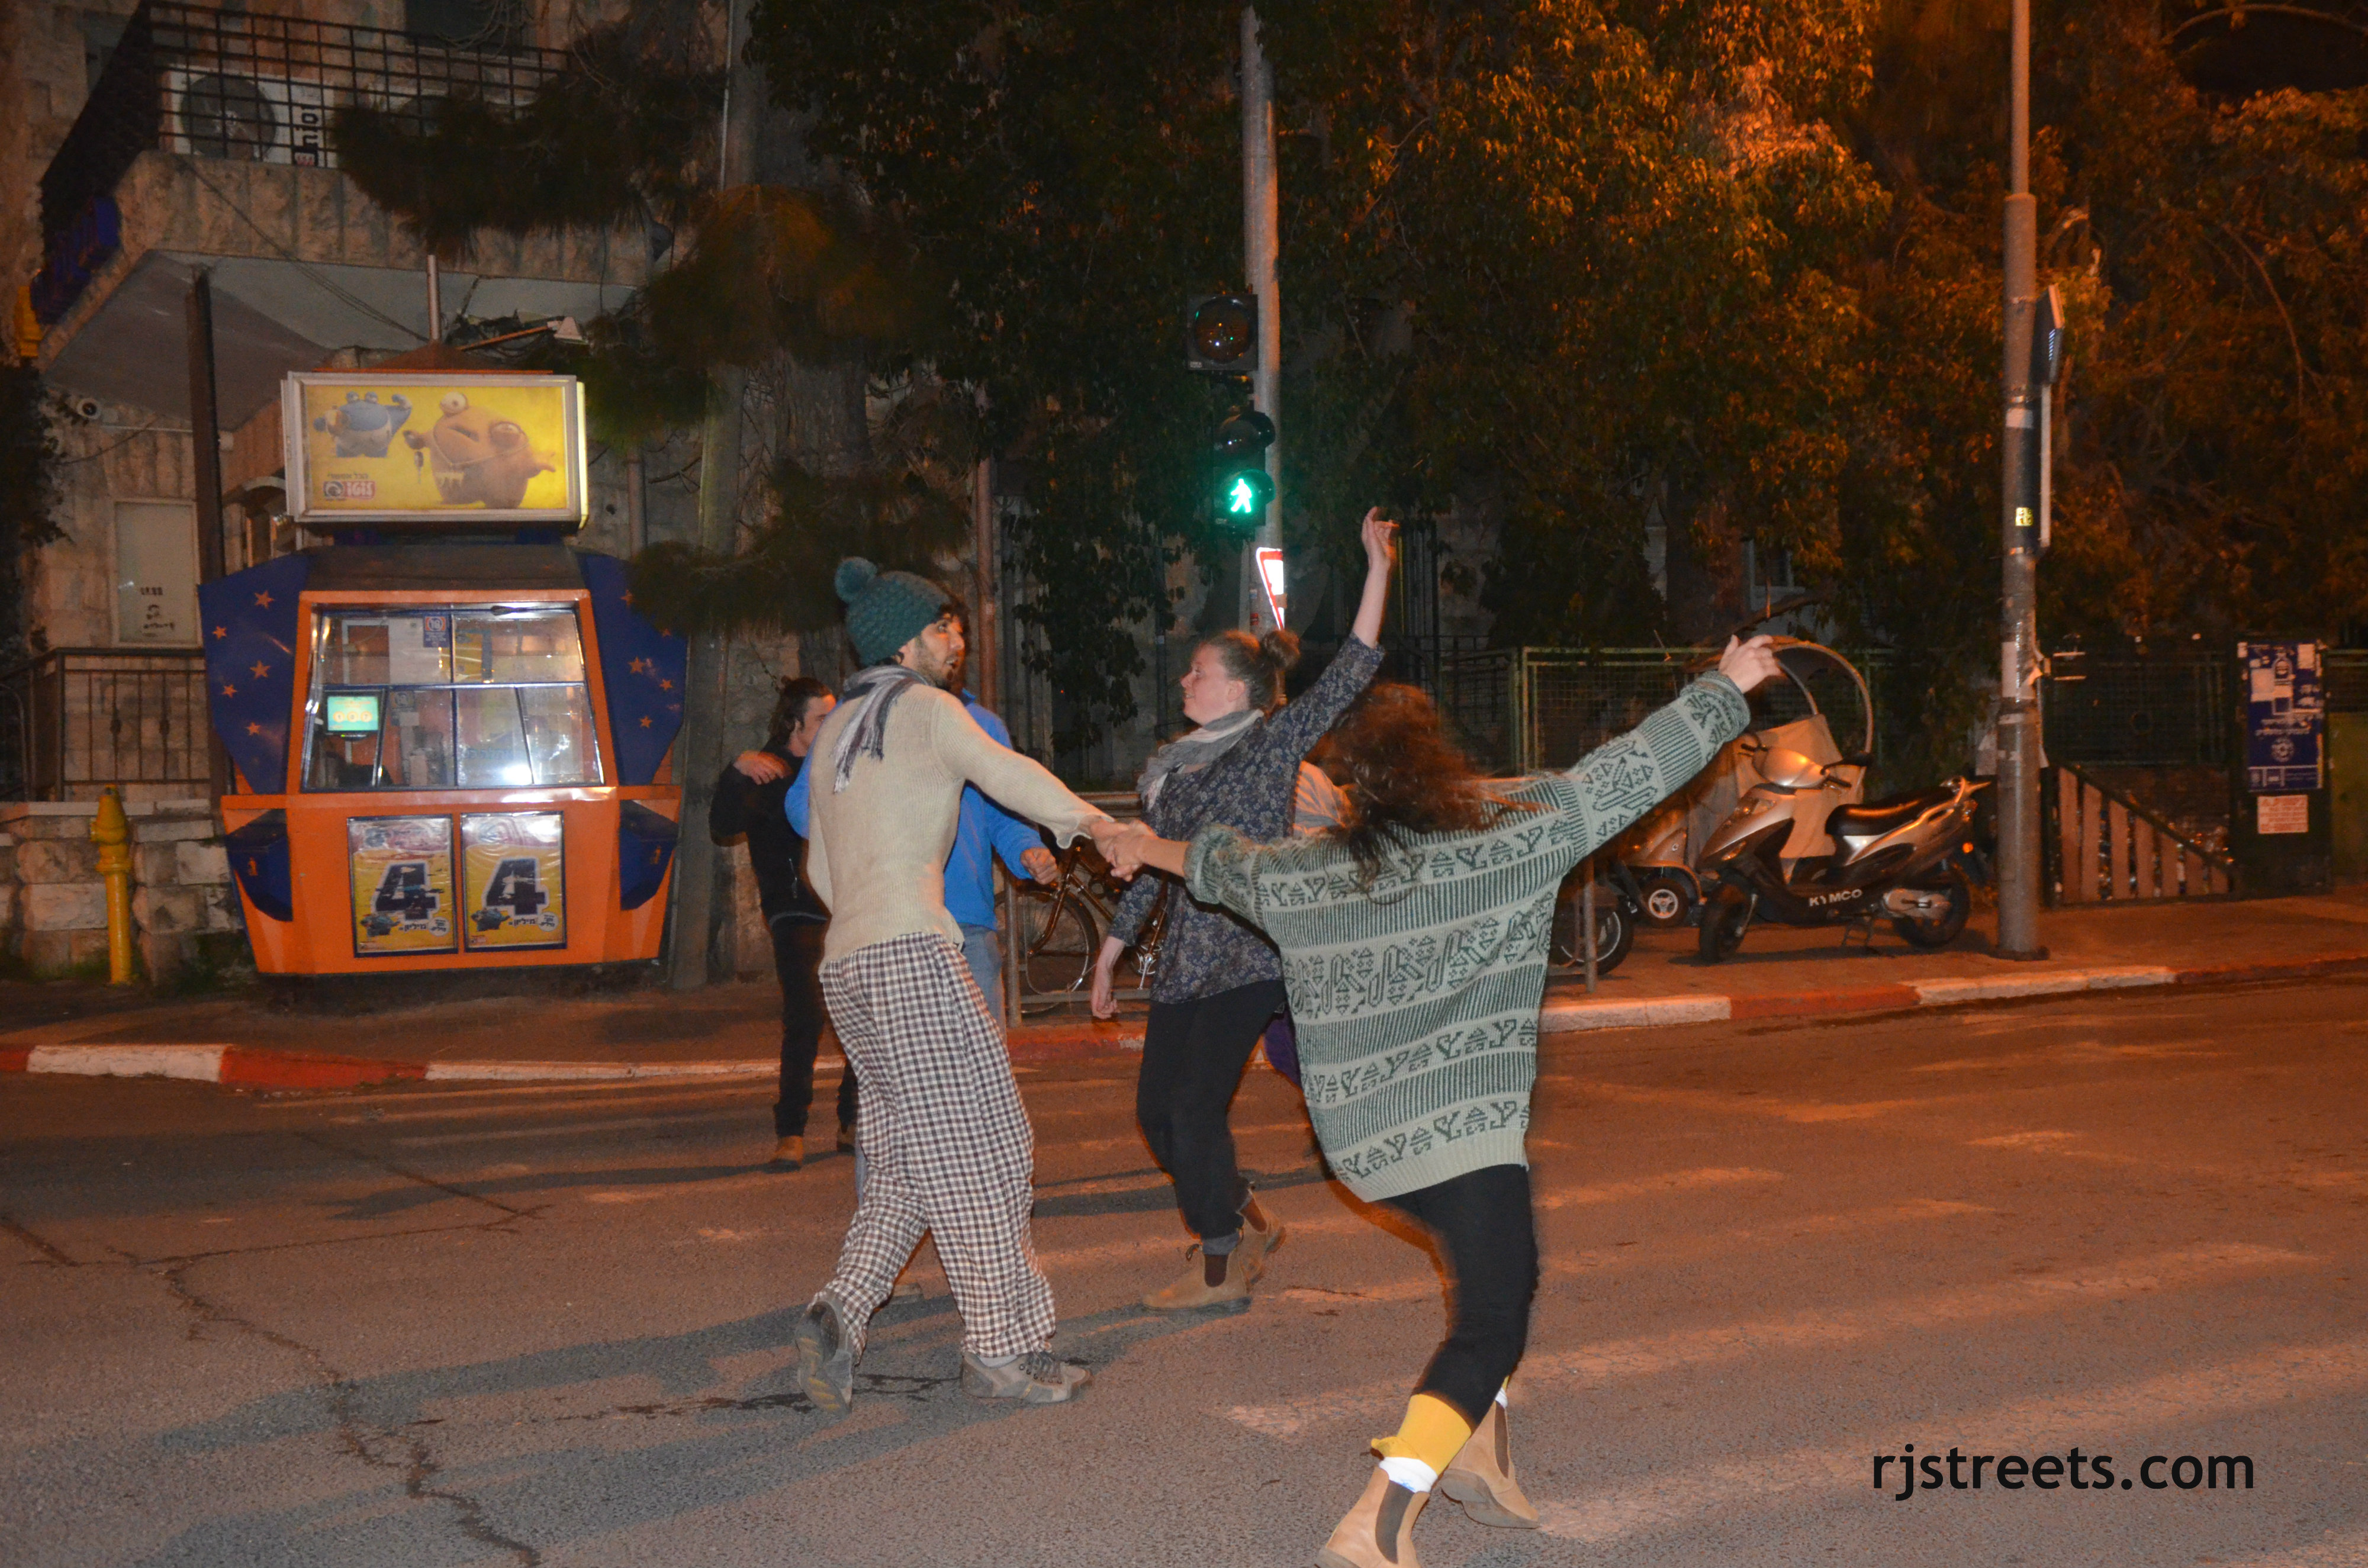 image people dancing, photo dancing in street, picture dancers in street